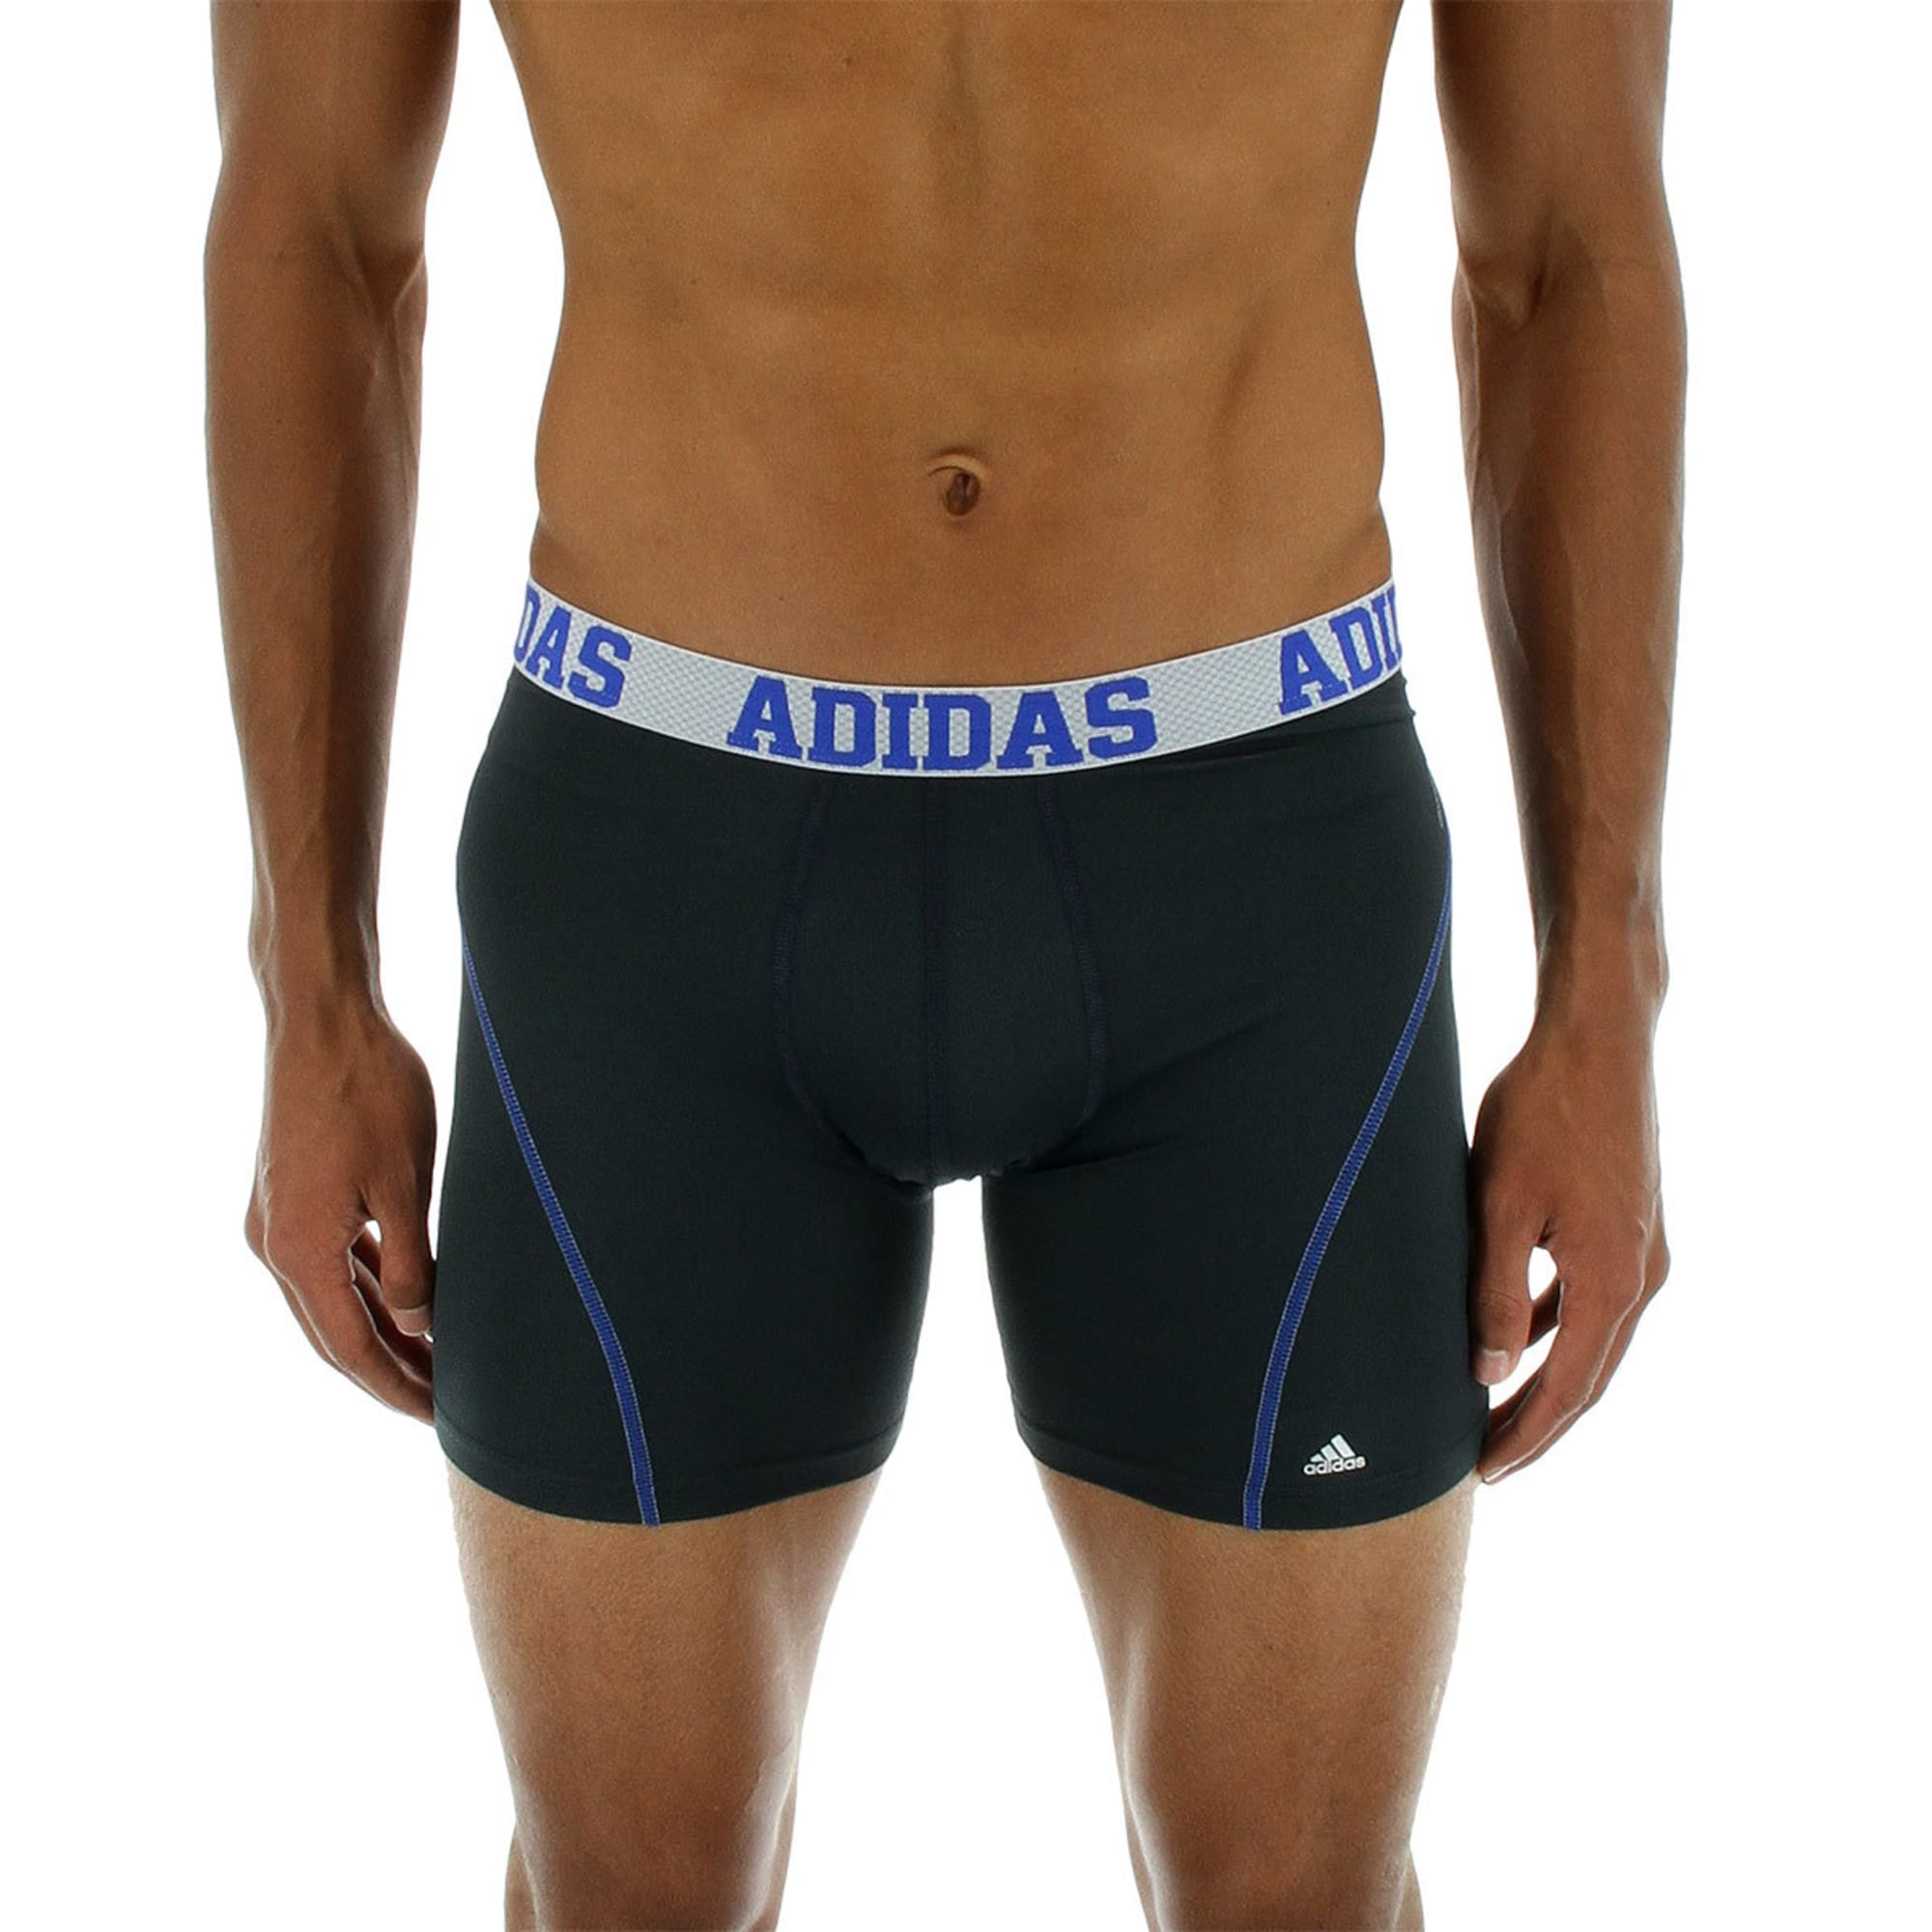 Adidas Men Underwear Boxer Briefs Shorts 4 PACKS Bk Gr Bl Rd Climacool  Light Mov